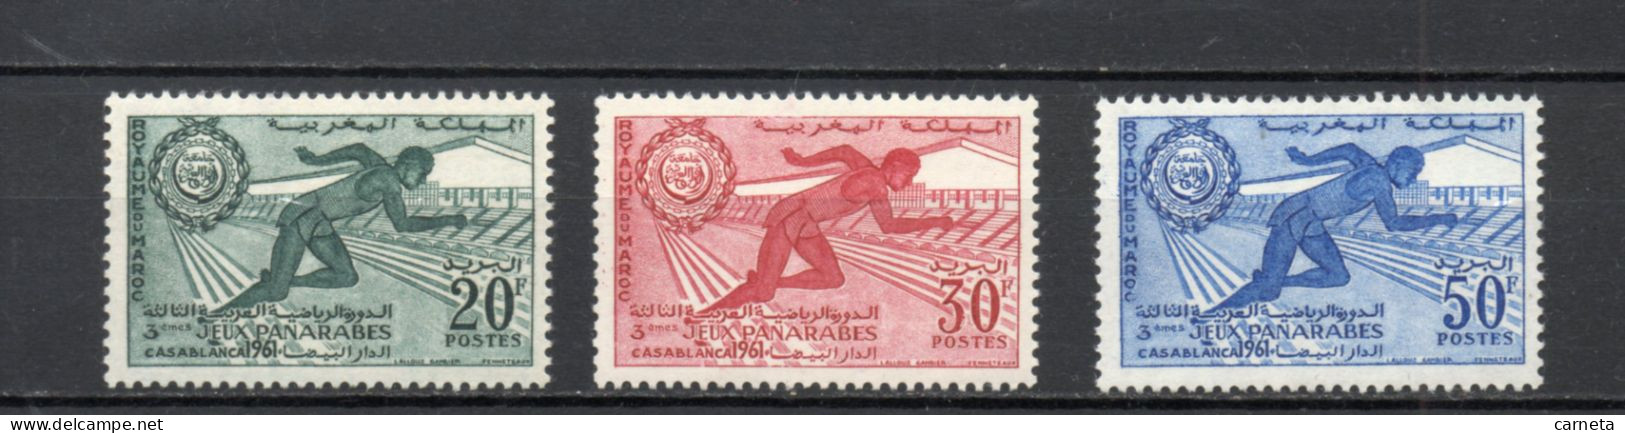 MAROC N°  421 à 423    NEUFS SANS CHARNIERE  COTE 2.50€   JEUX PANARABES SPORT - Maroc (1956-...)